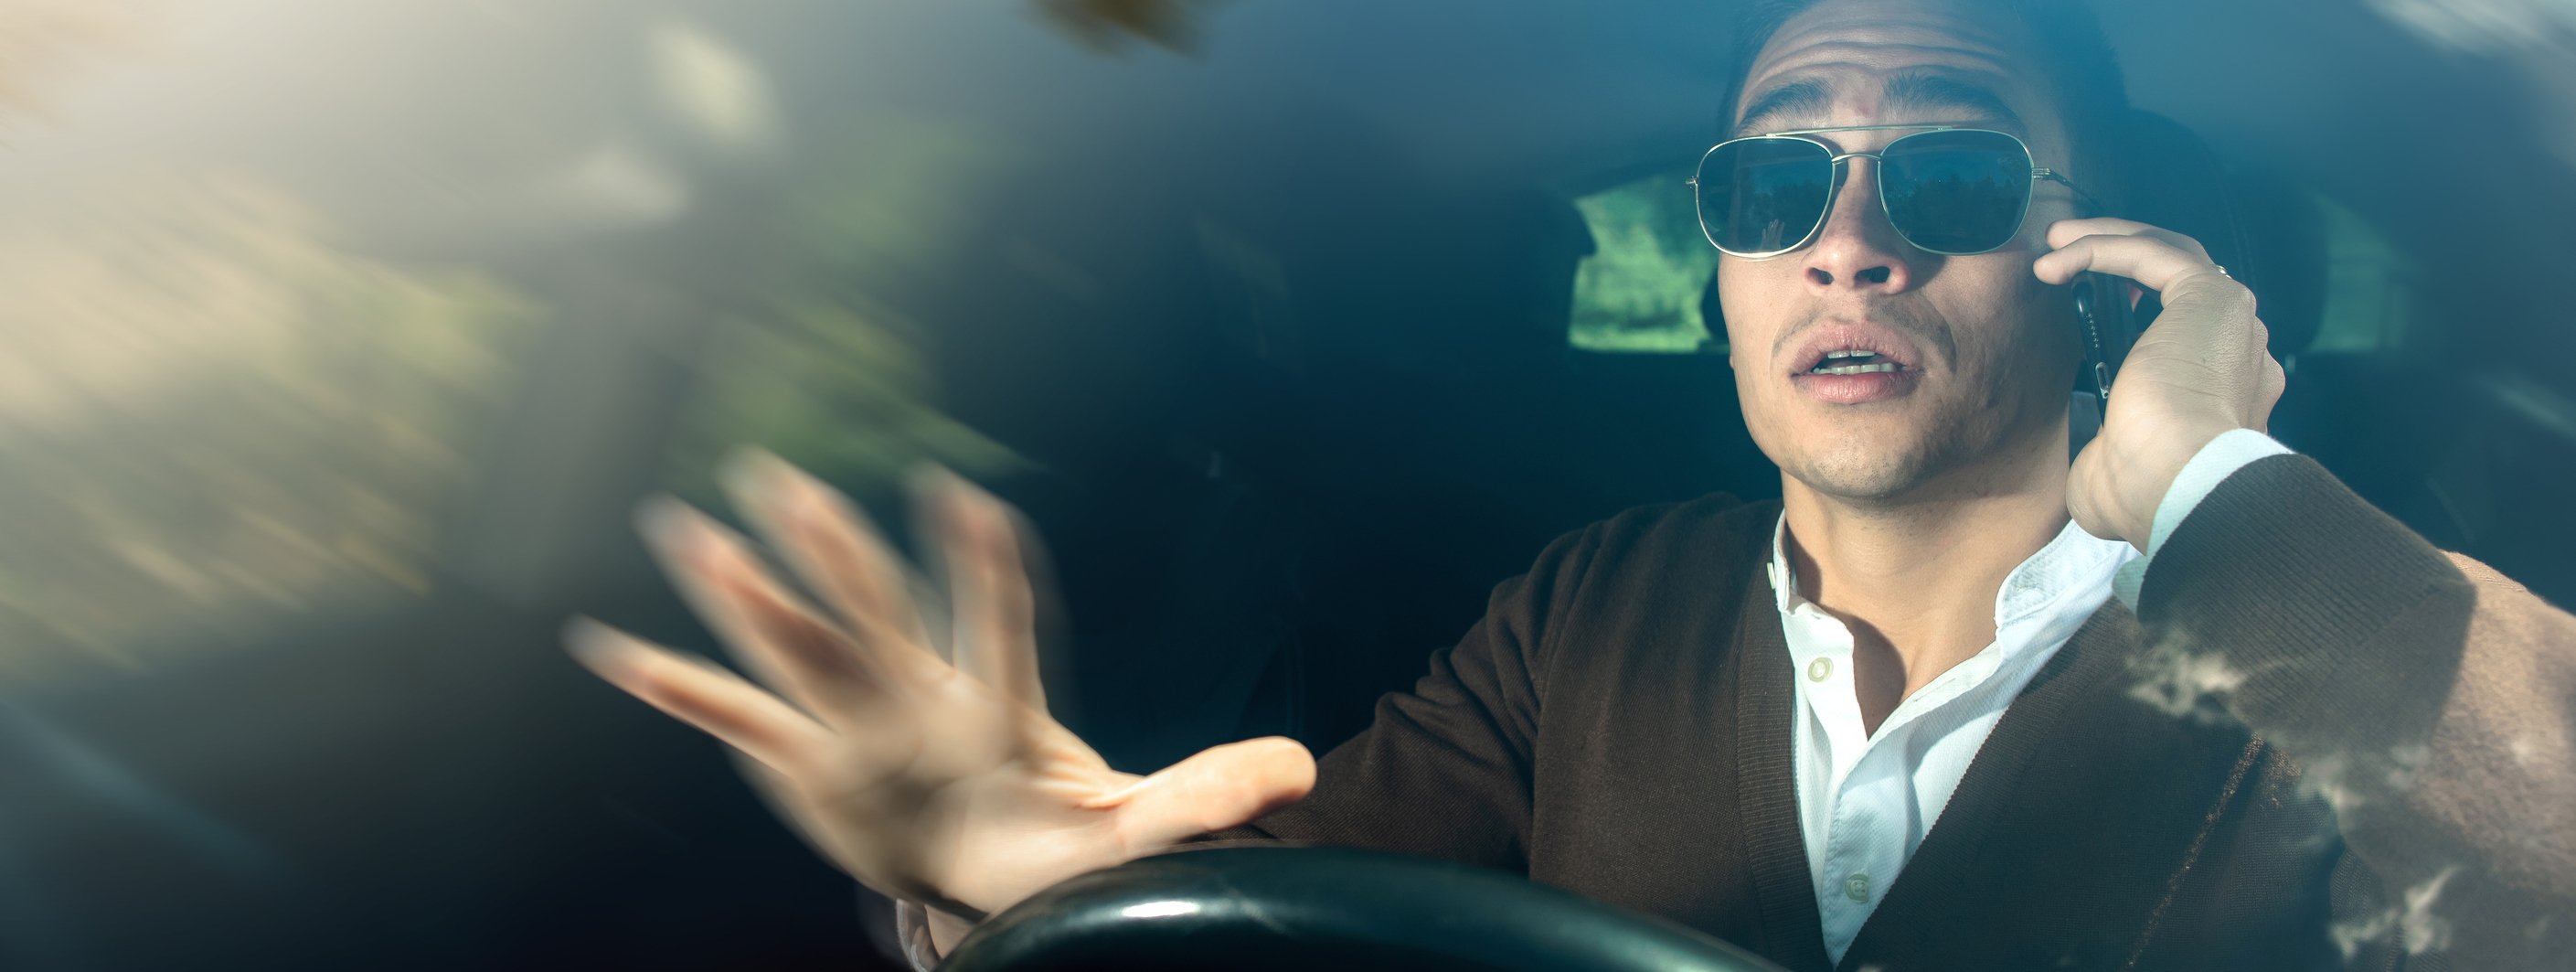 Man driving while wearing dark sunglasses